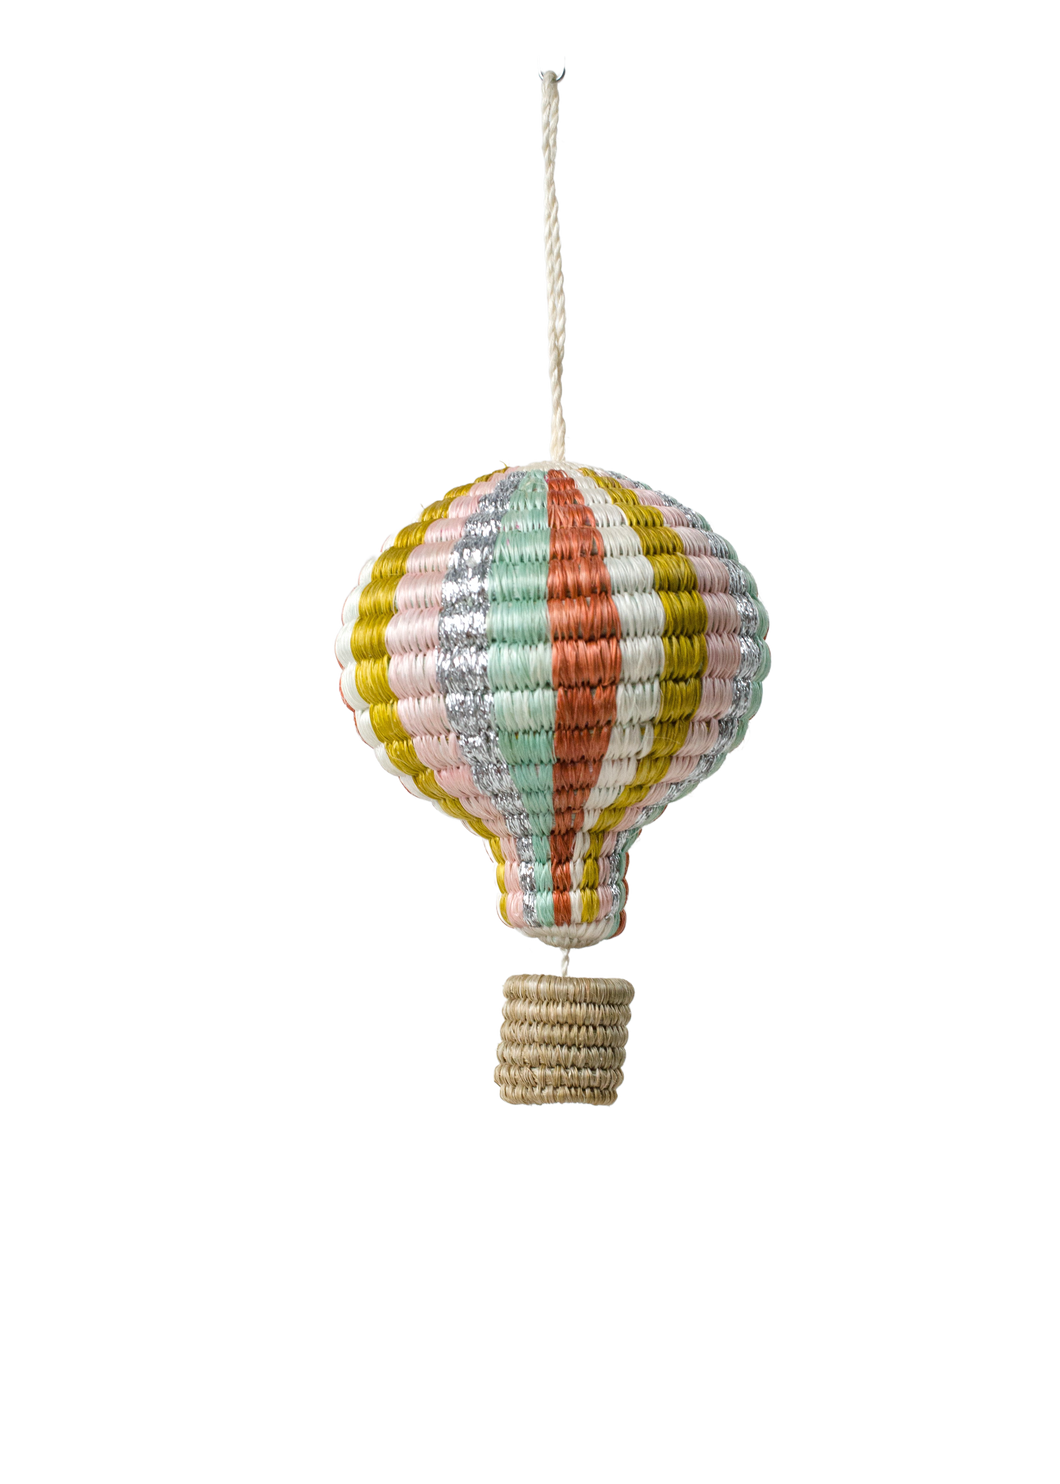 Striped Jewel Toned Hot Air Balloon Ornament